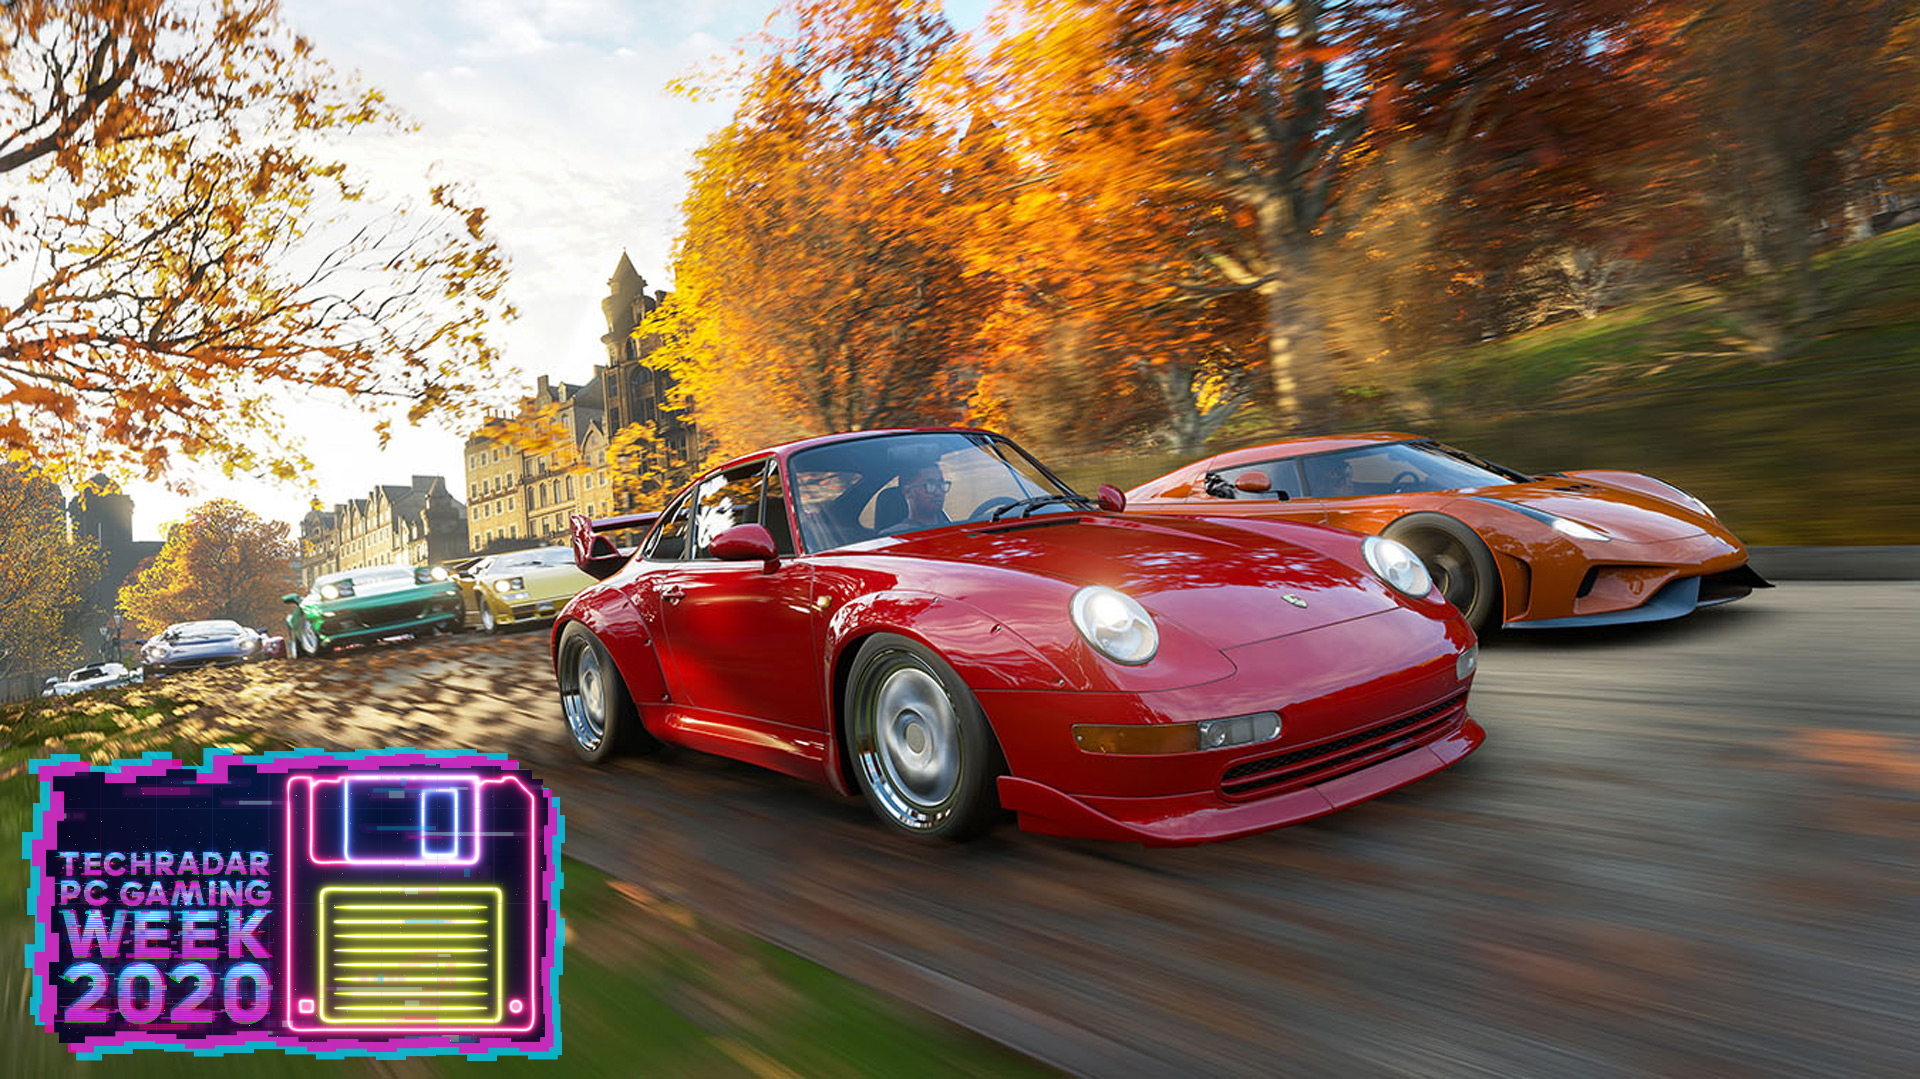 The 10 best racing games on PC | TechRadar